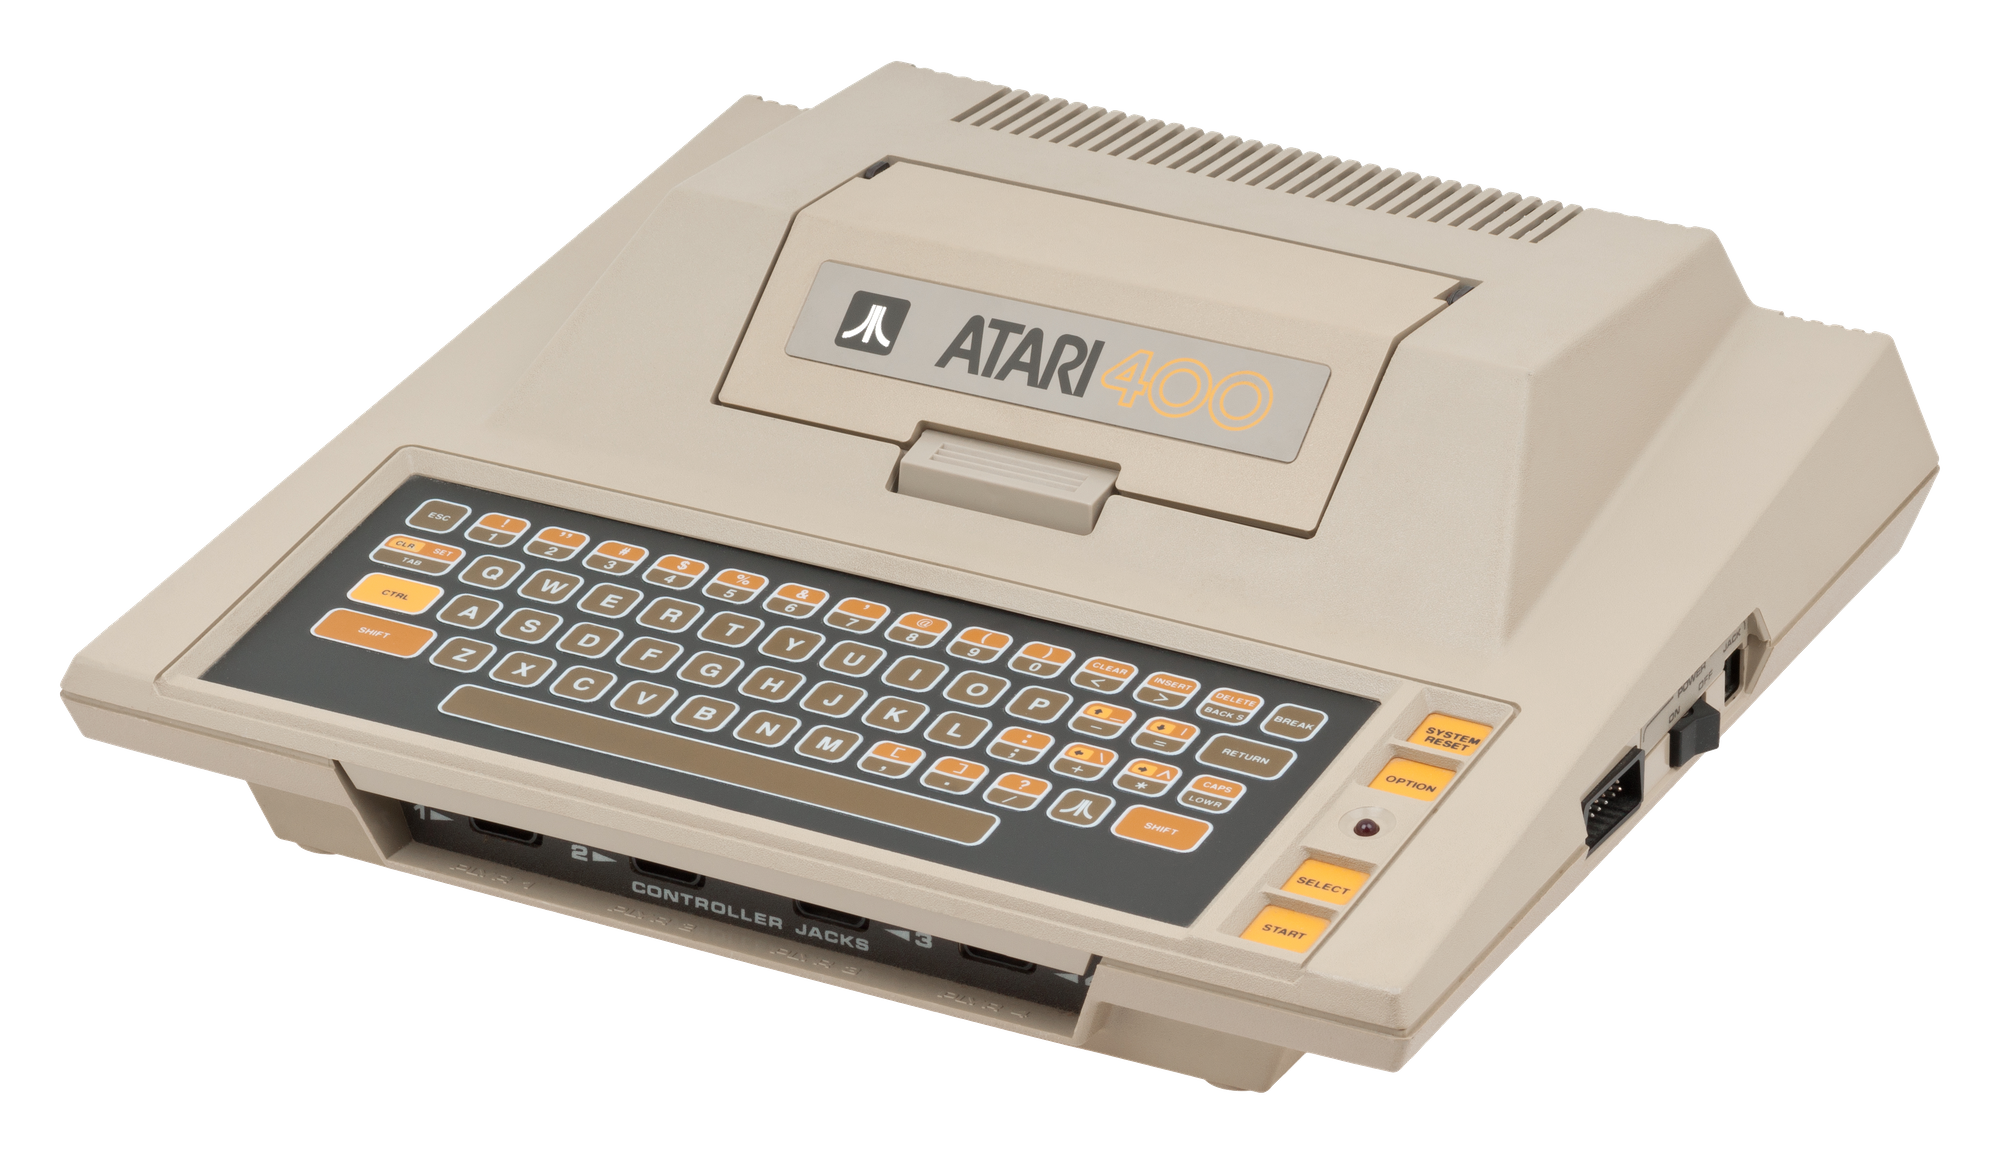 The Atari 400